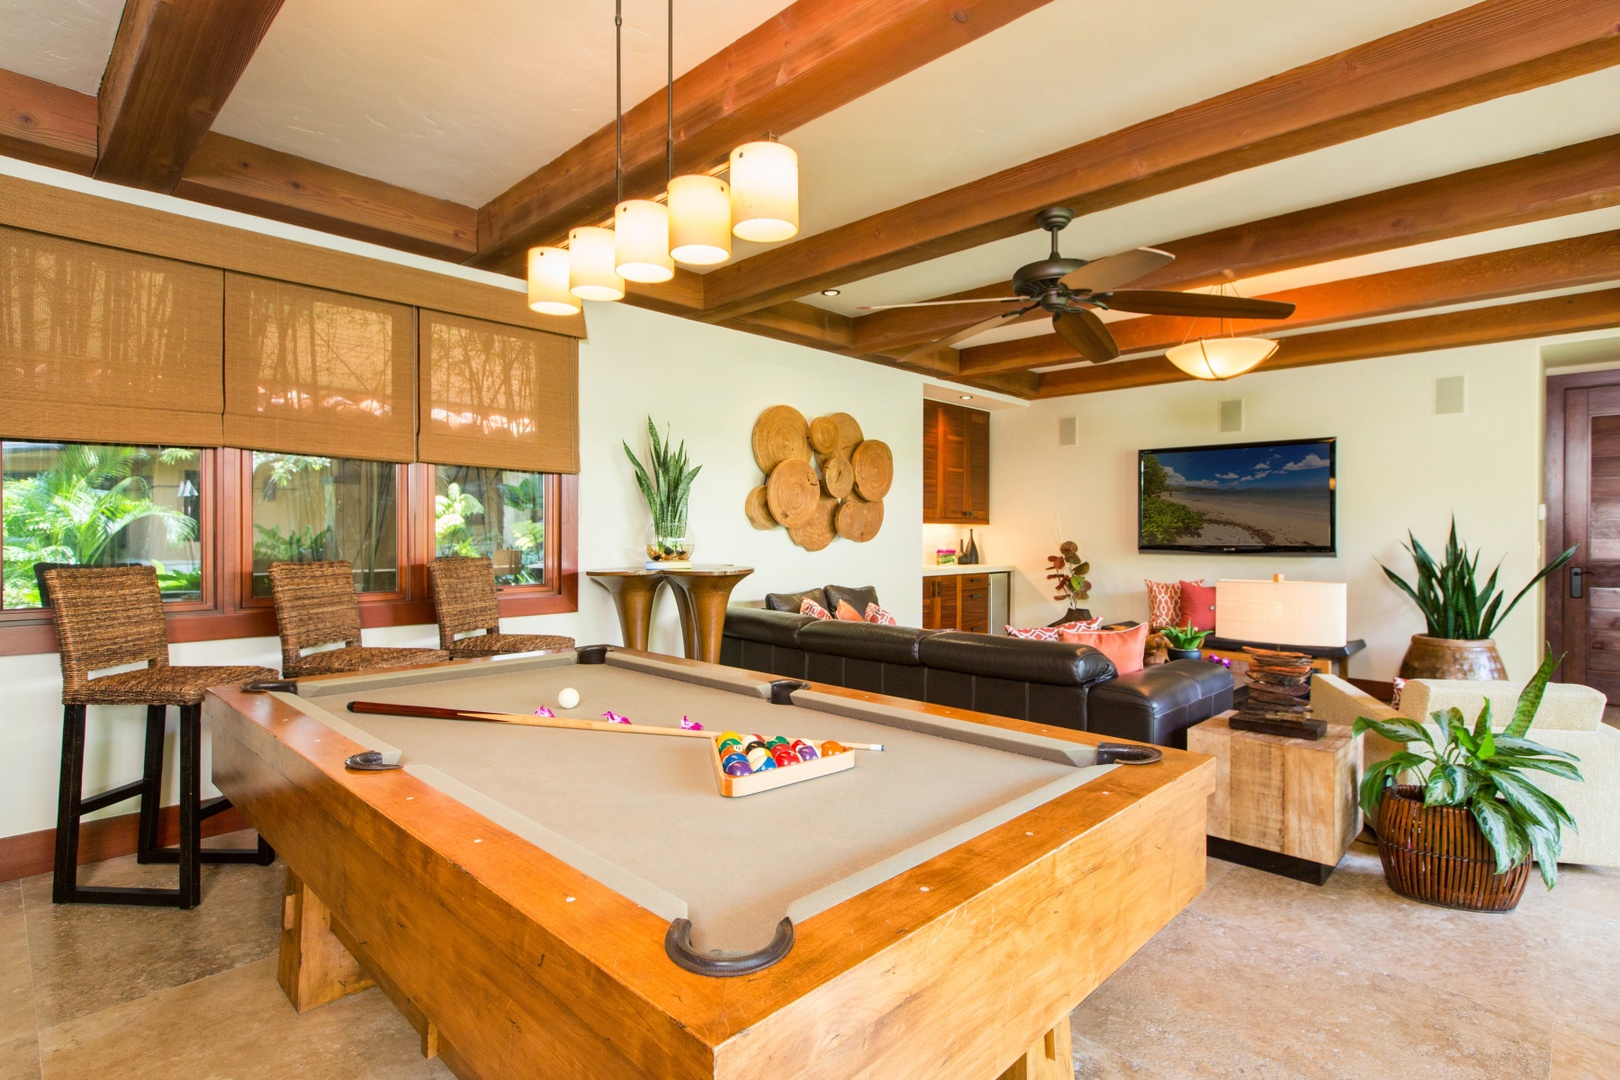 Honolulu Vacation Rentals, Royal Kahala Estate - Game Room with Pool Table